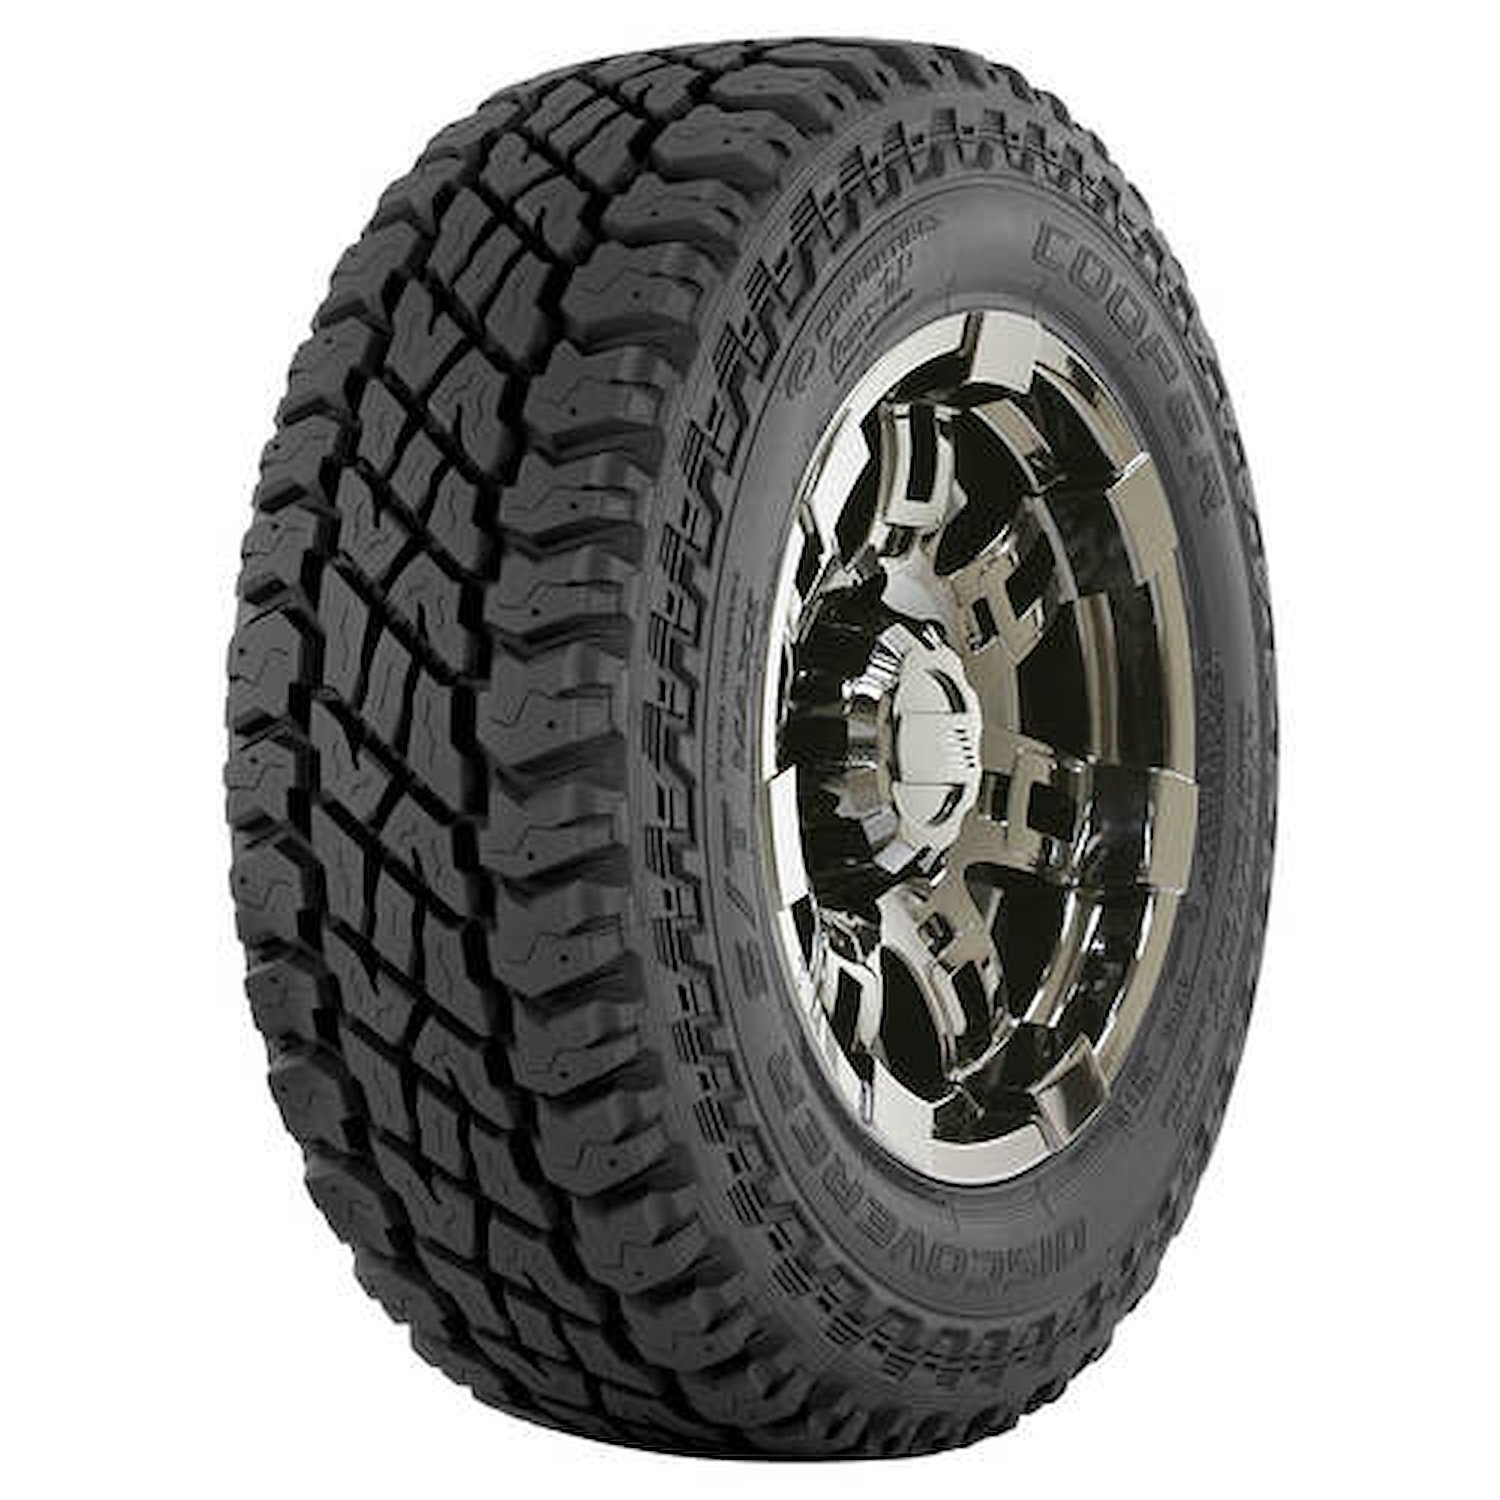 Discoverer S/T Maxx All-Terrain Tire, LT285/60R20